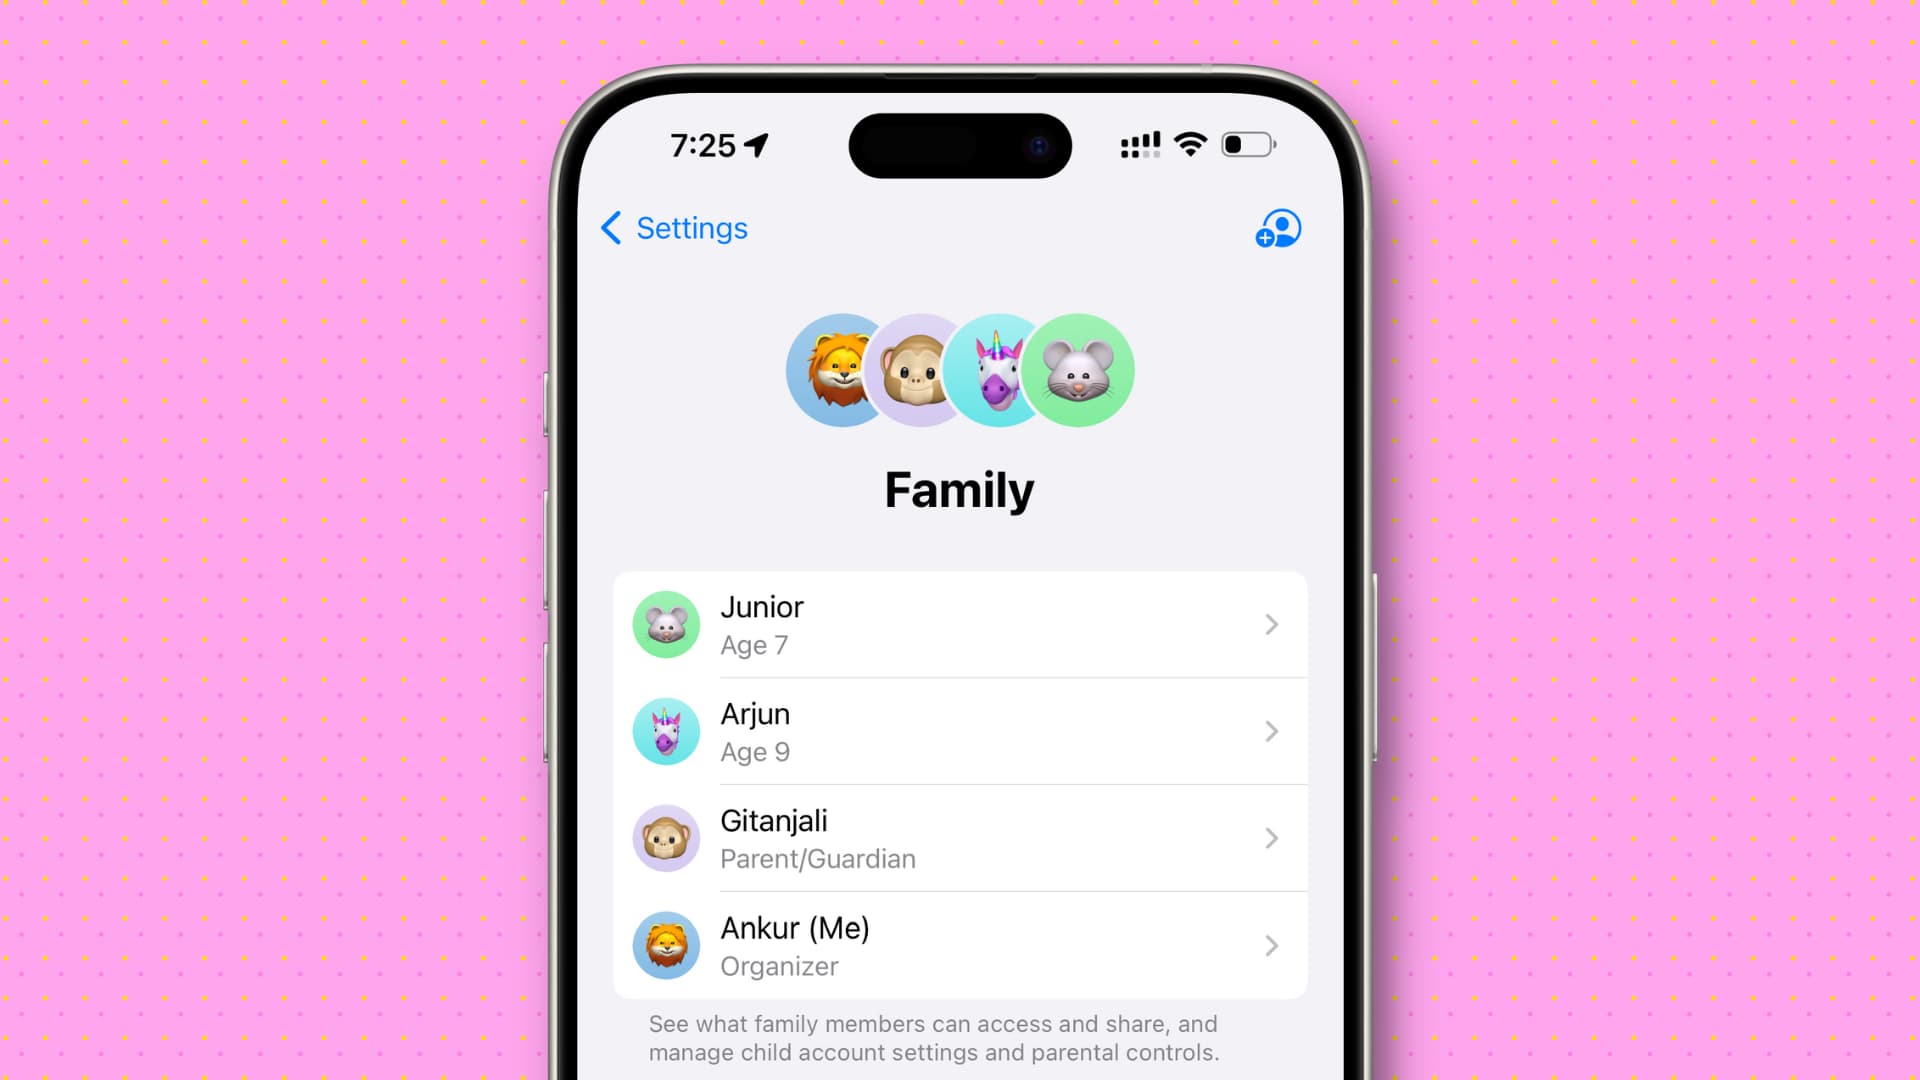 Family Screen In IPhone Settings 